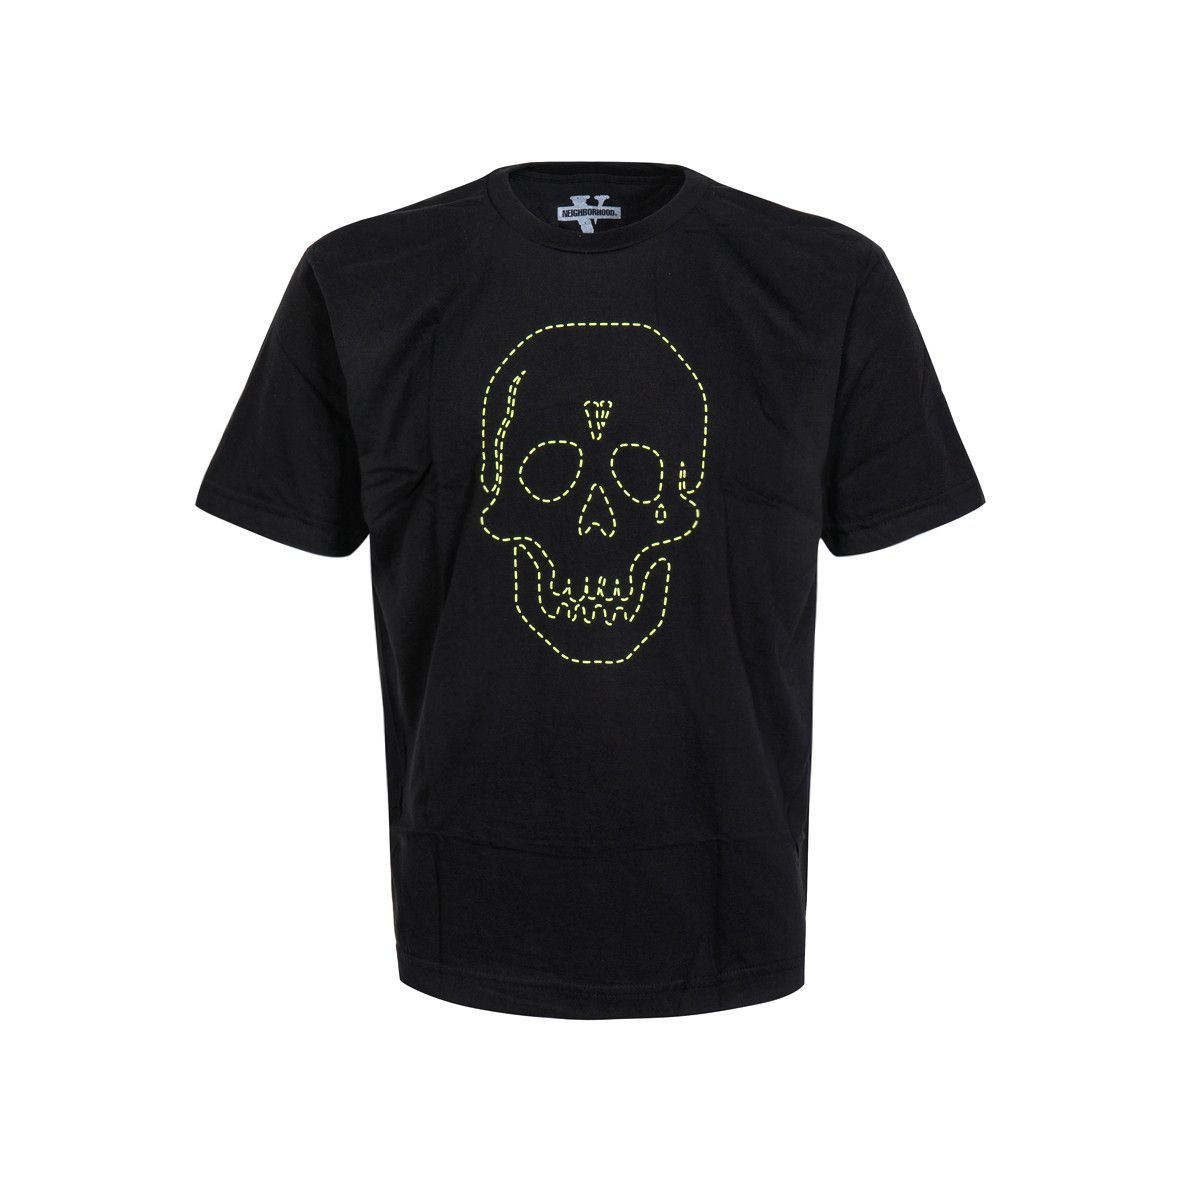 Vlone Vlone x Neighborhood Skull Black/Green T Shirt S